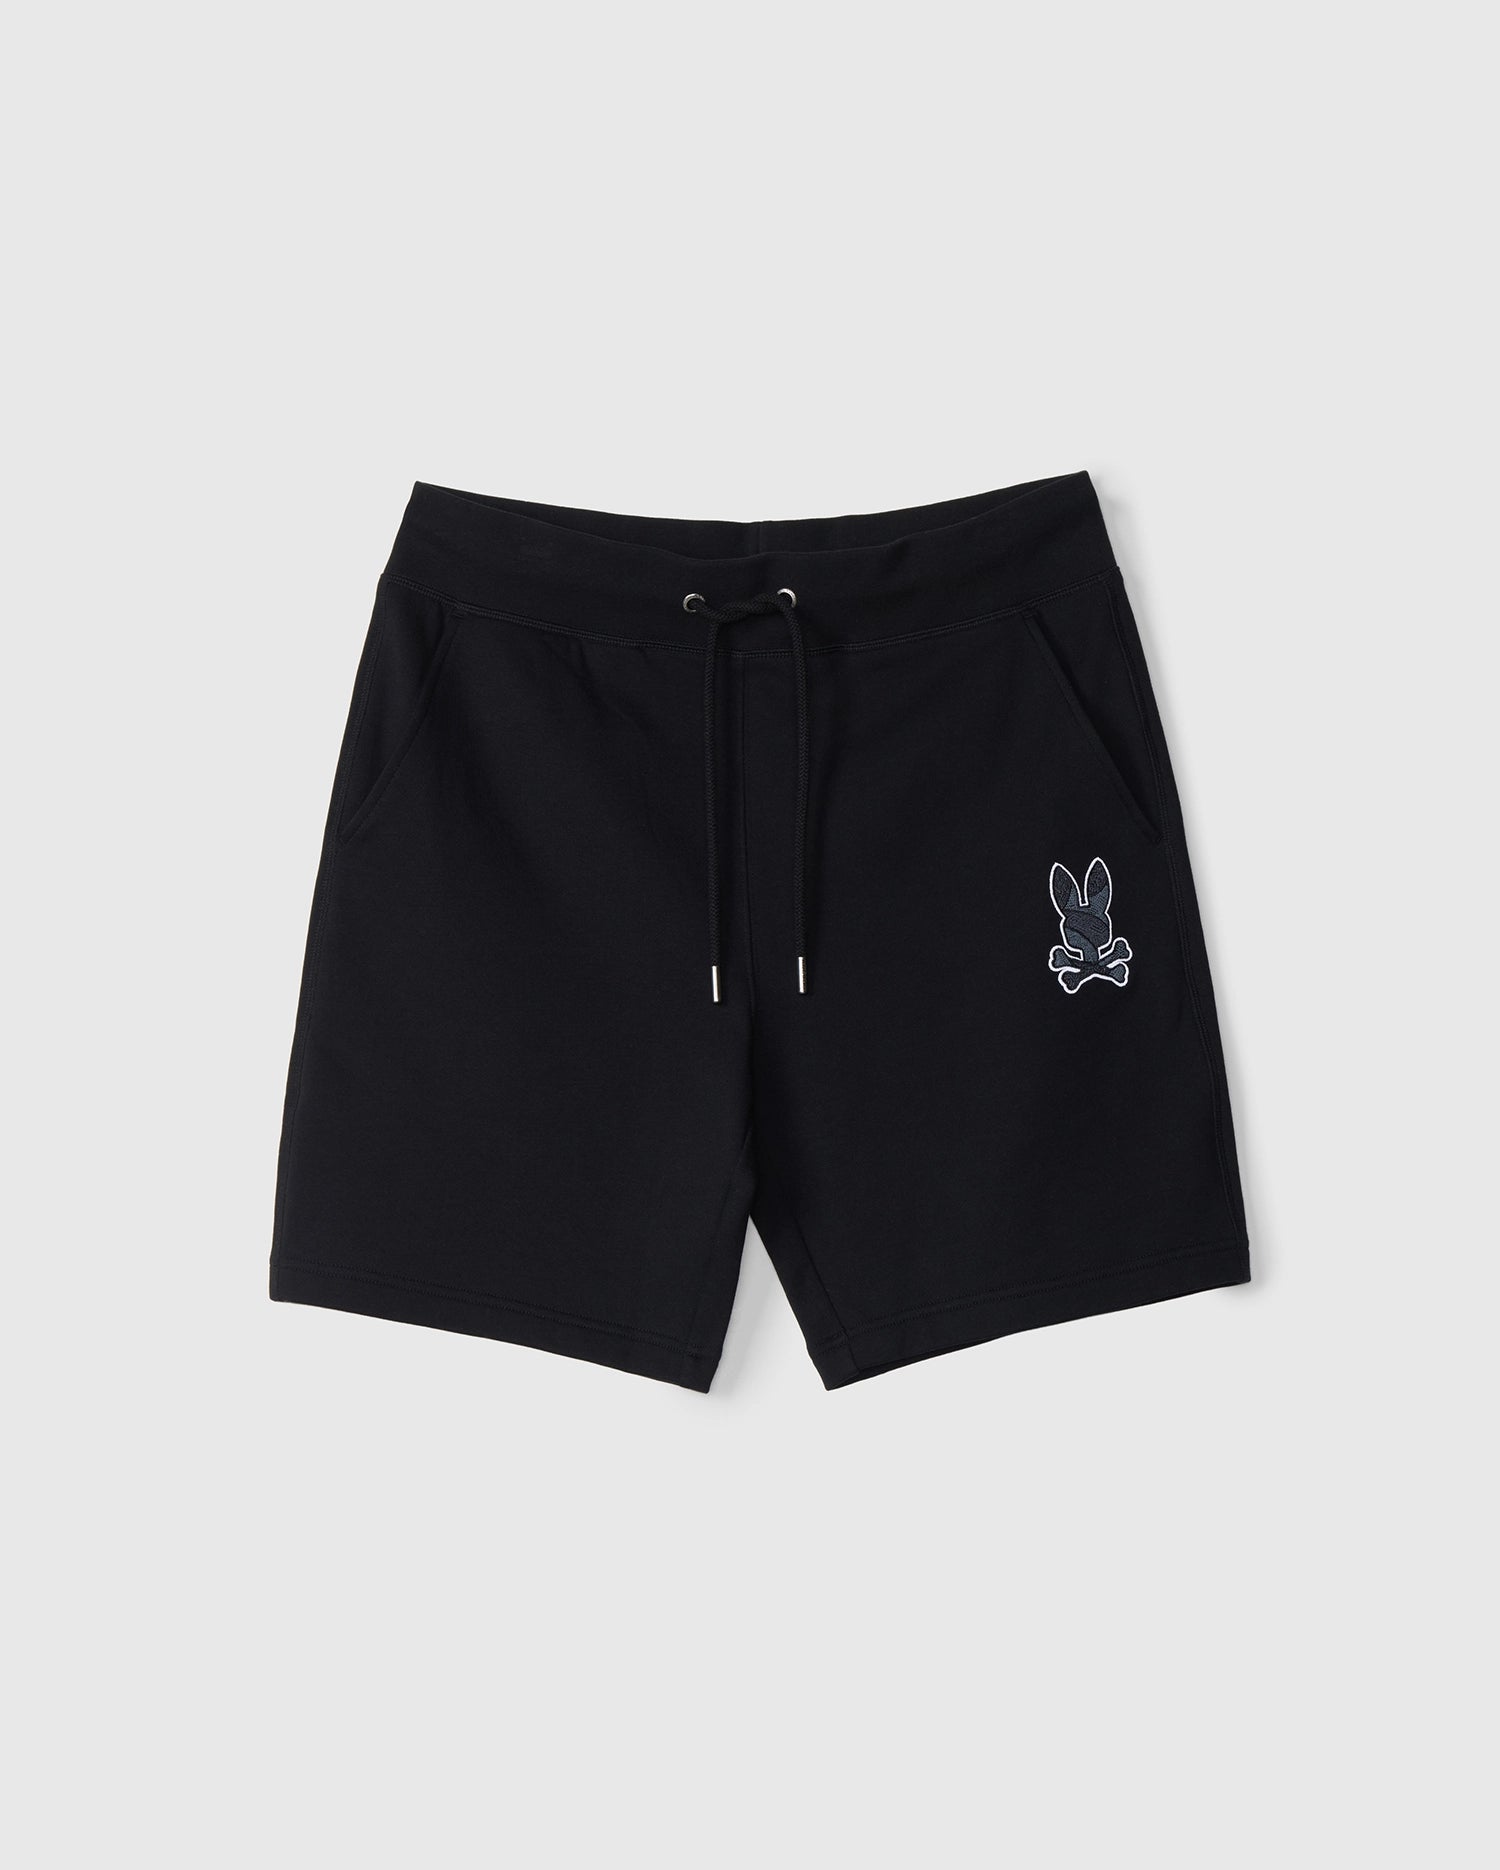 Men's Shorts, Casual Flat Front Shorts